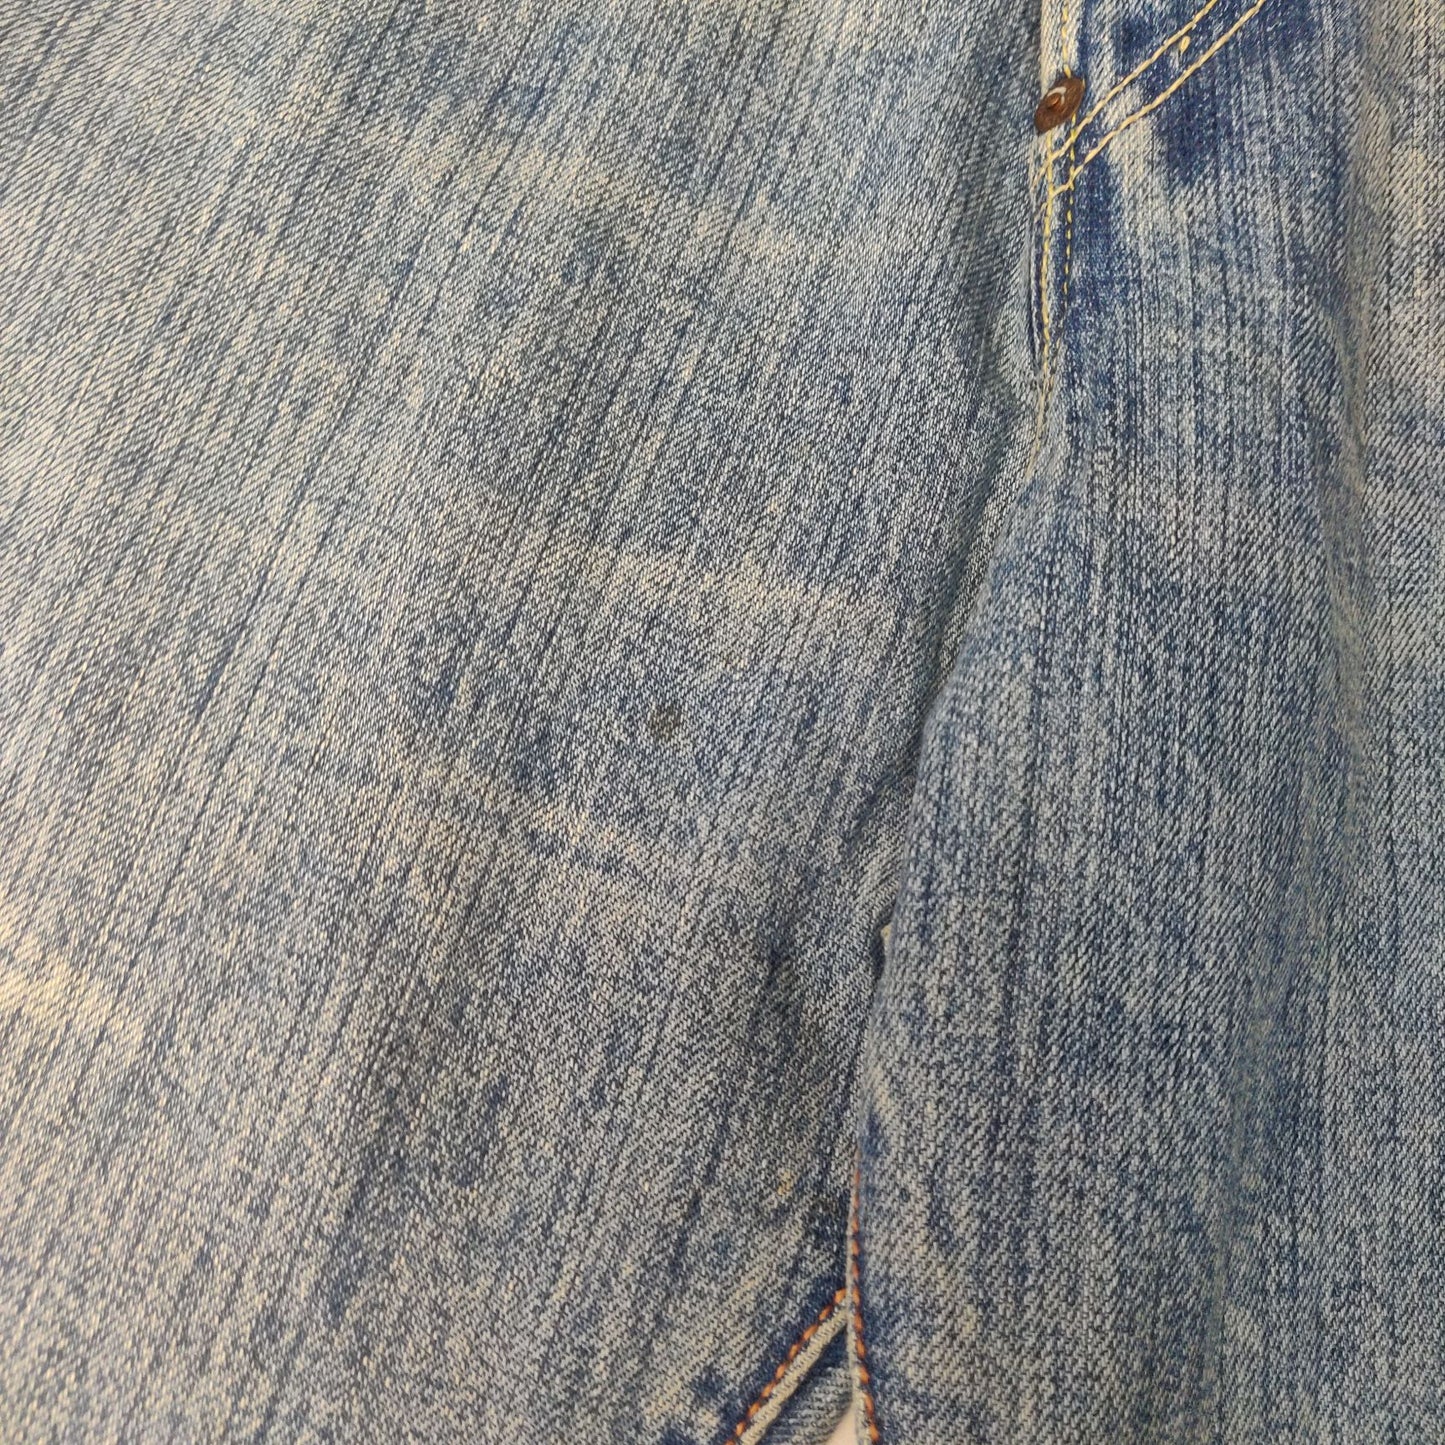 Levis Blue Distressed Denim Jeans Regular Fit Men Size W34/L32